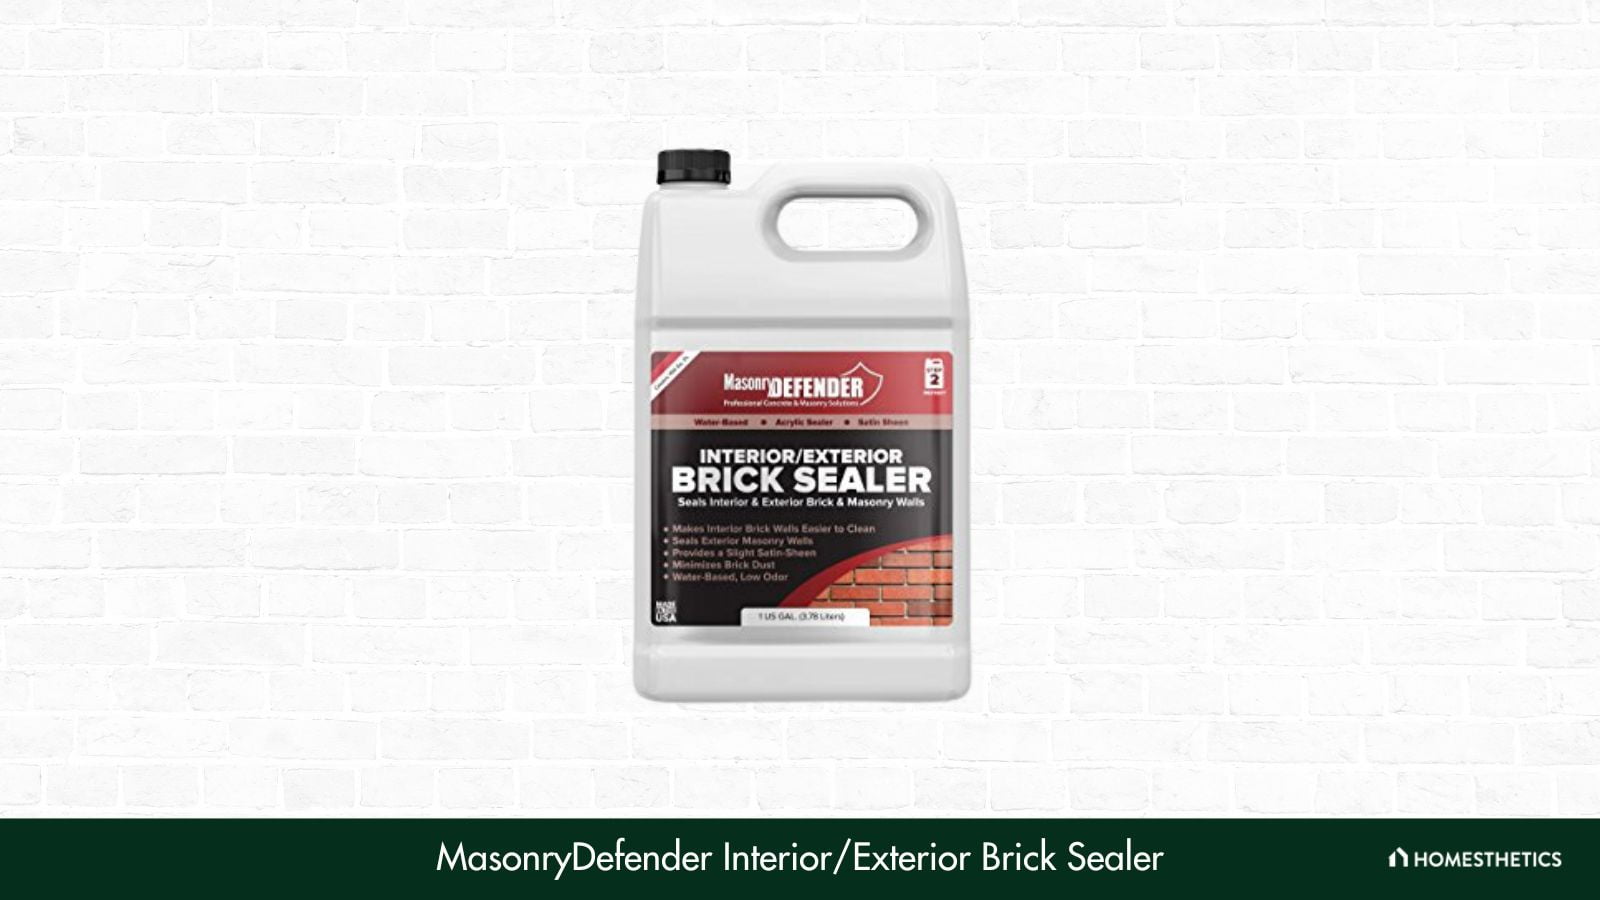 MasonryDefender InteriorExterior Brick Sealer